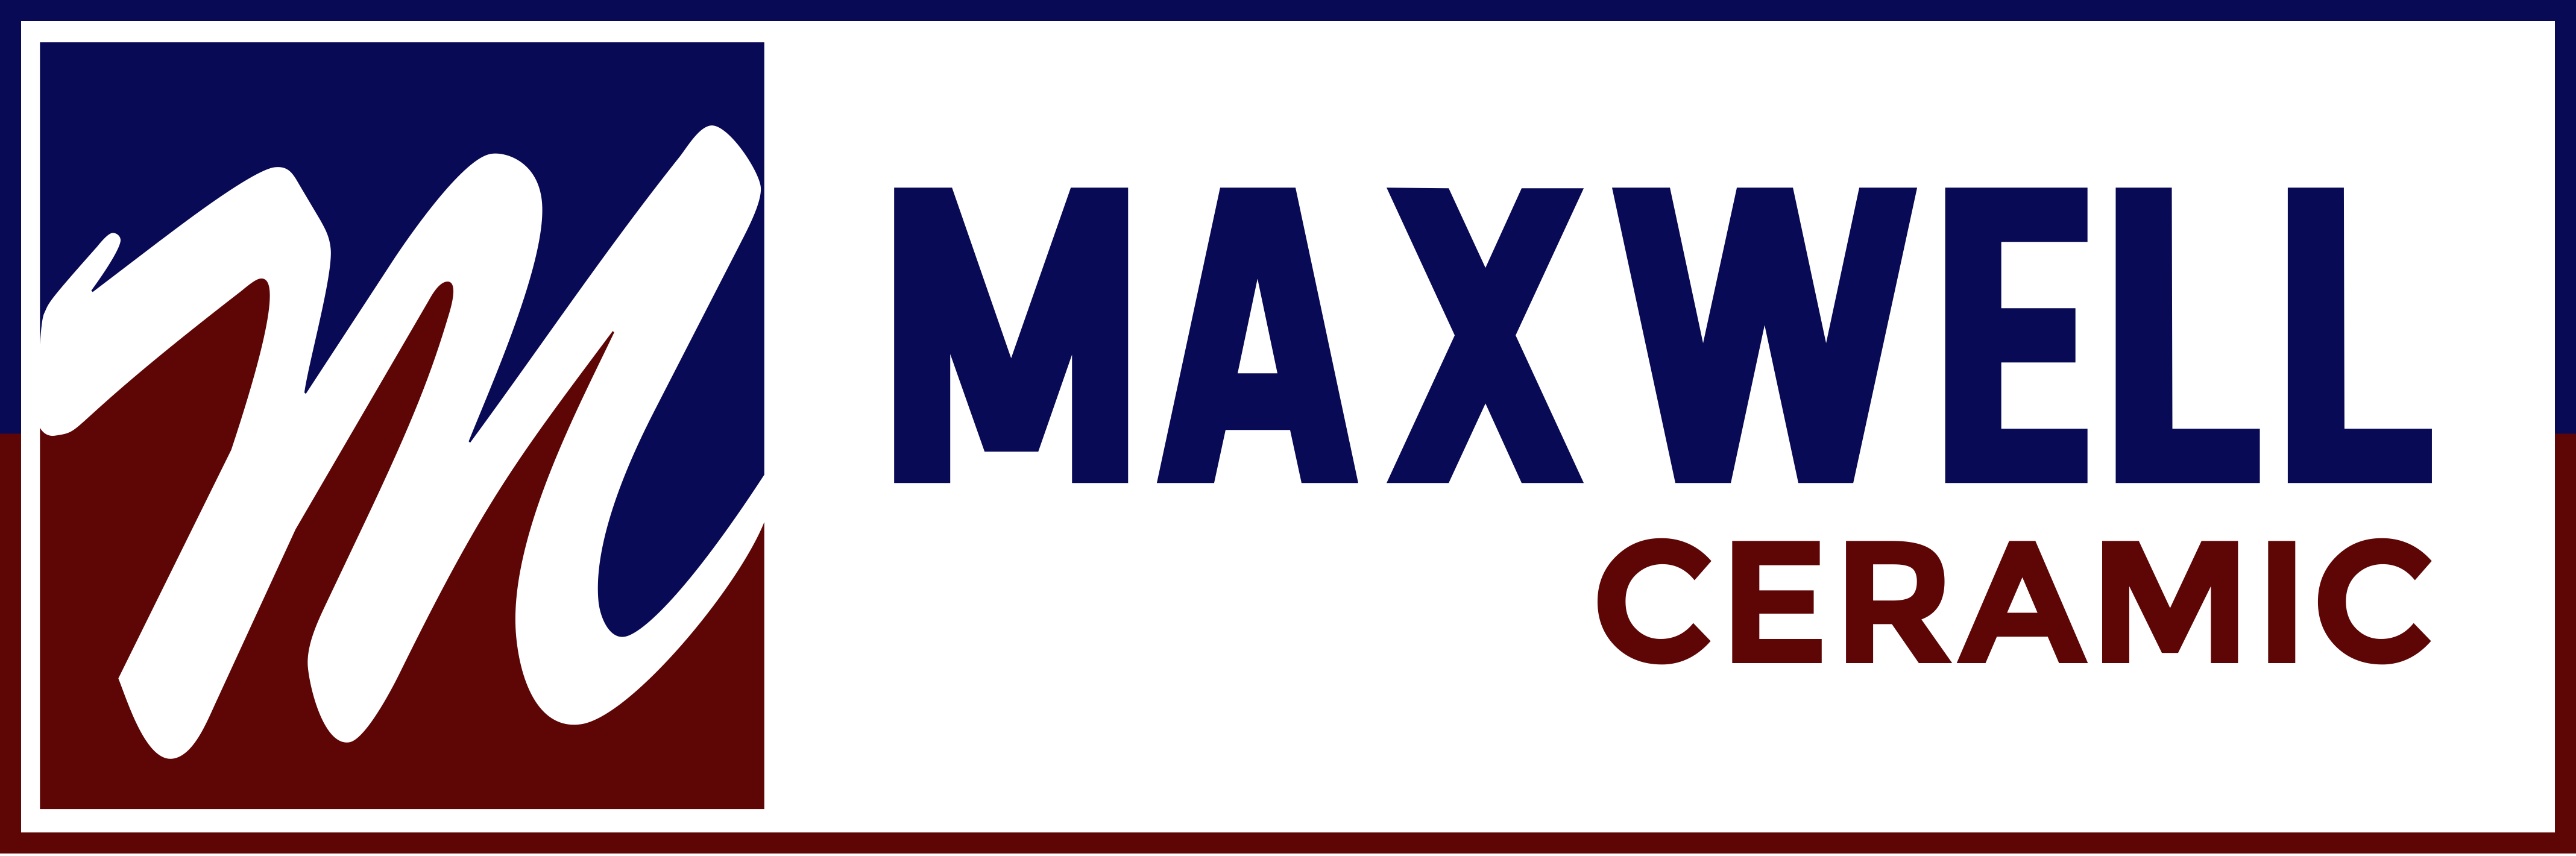 MAXWELL CERAMIC : Brand Short Description Type Here.